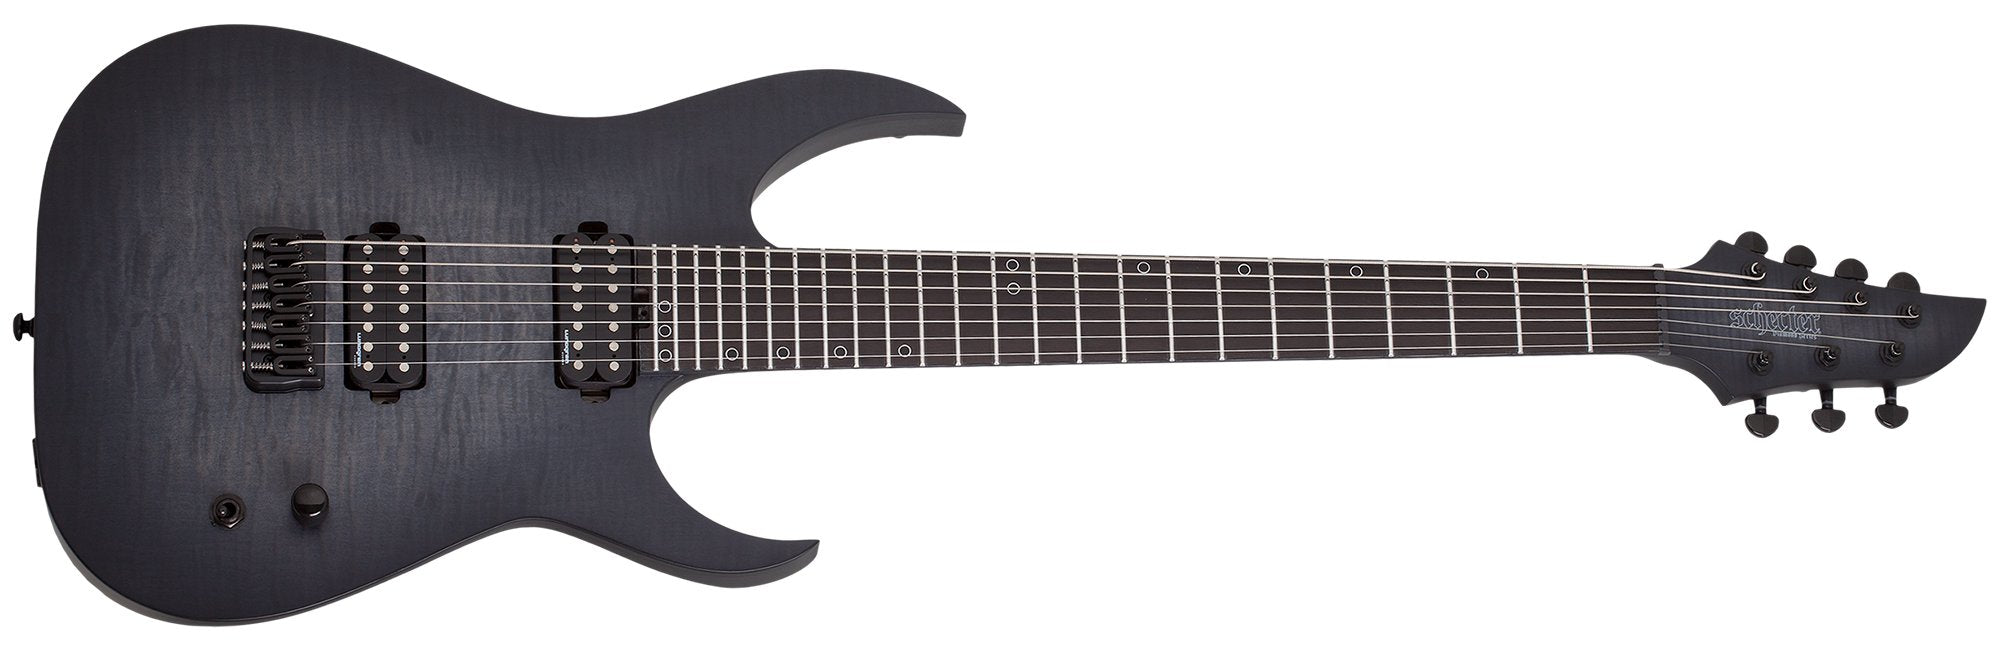 Schecter KM-7 MK-III Legacy 7 String Electric Guitar, Transparent Black Burst 875-SHC